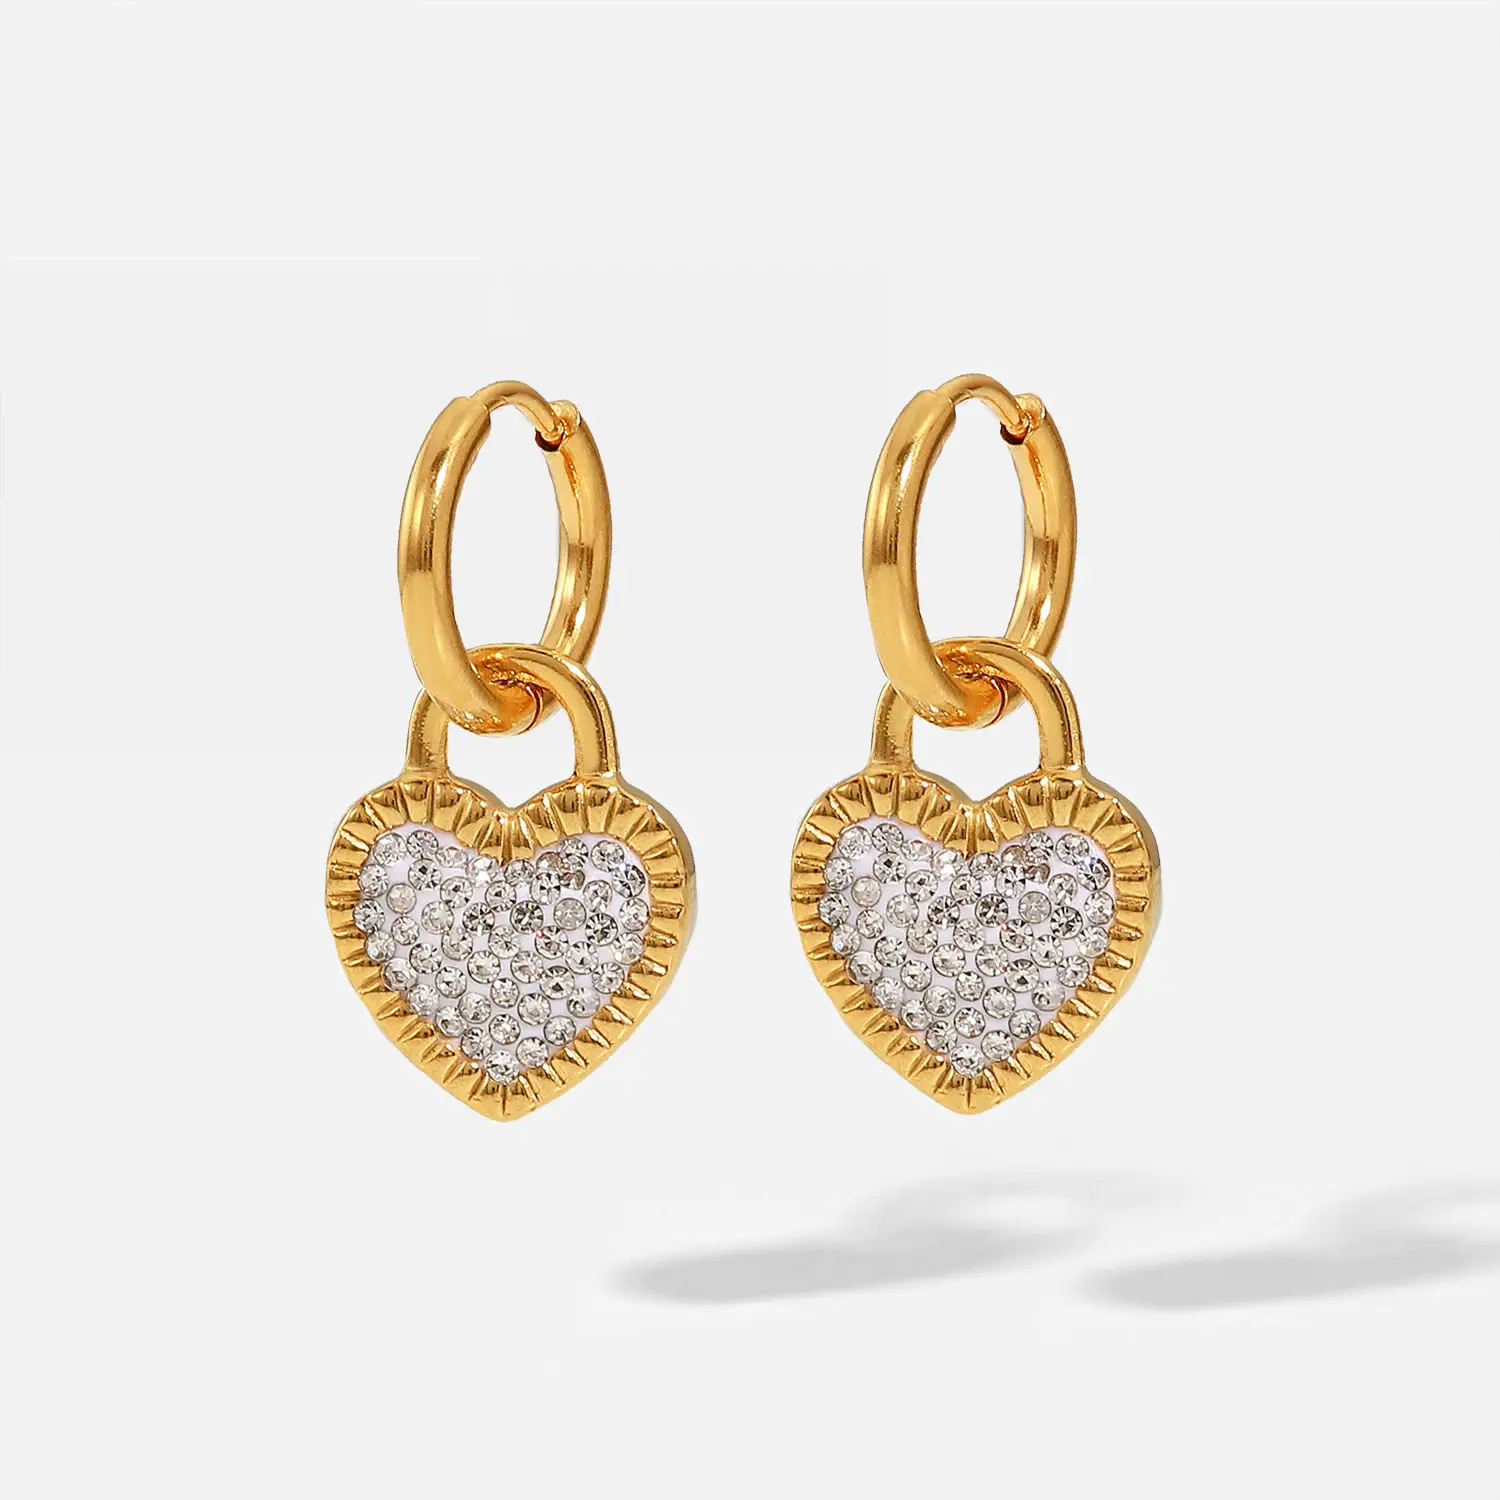 Stainless Steel 18K Gold plated Heart Hoop Earrings Girls White Cubic Zirconia Earrings